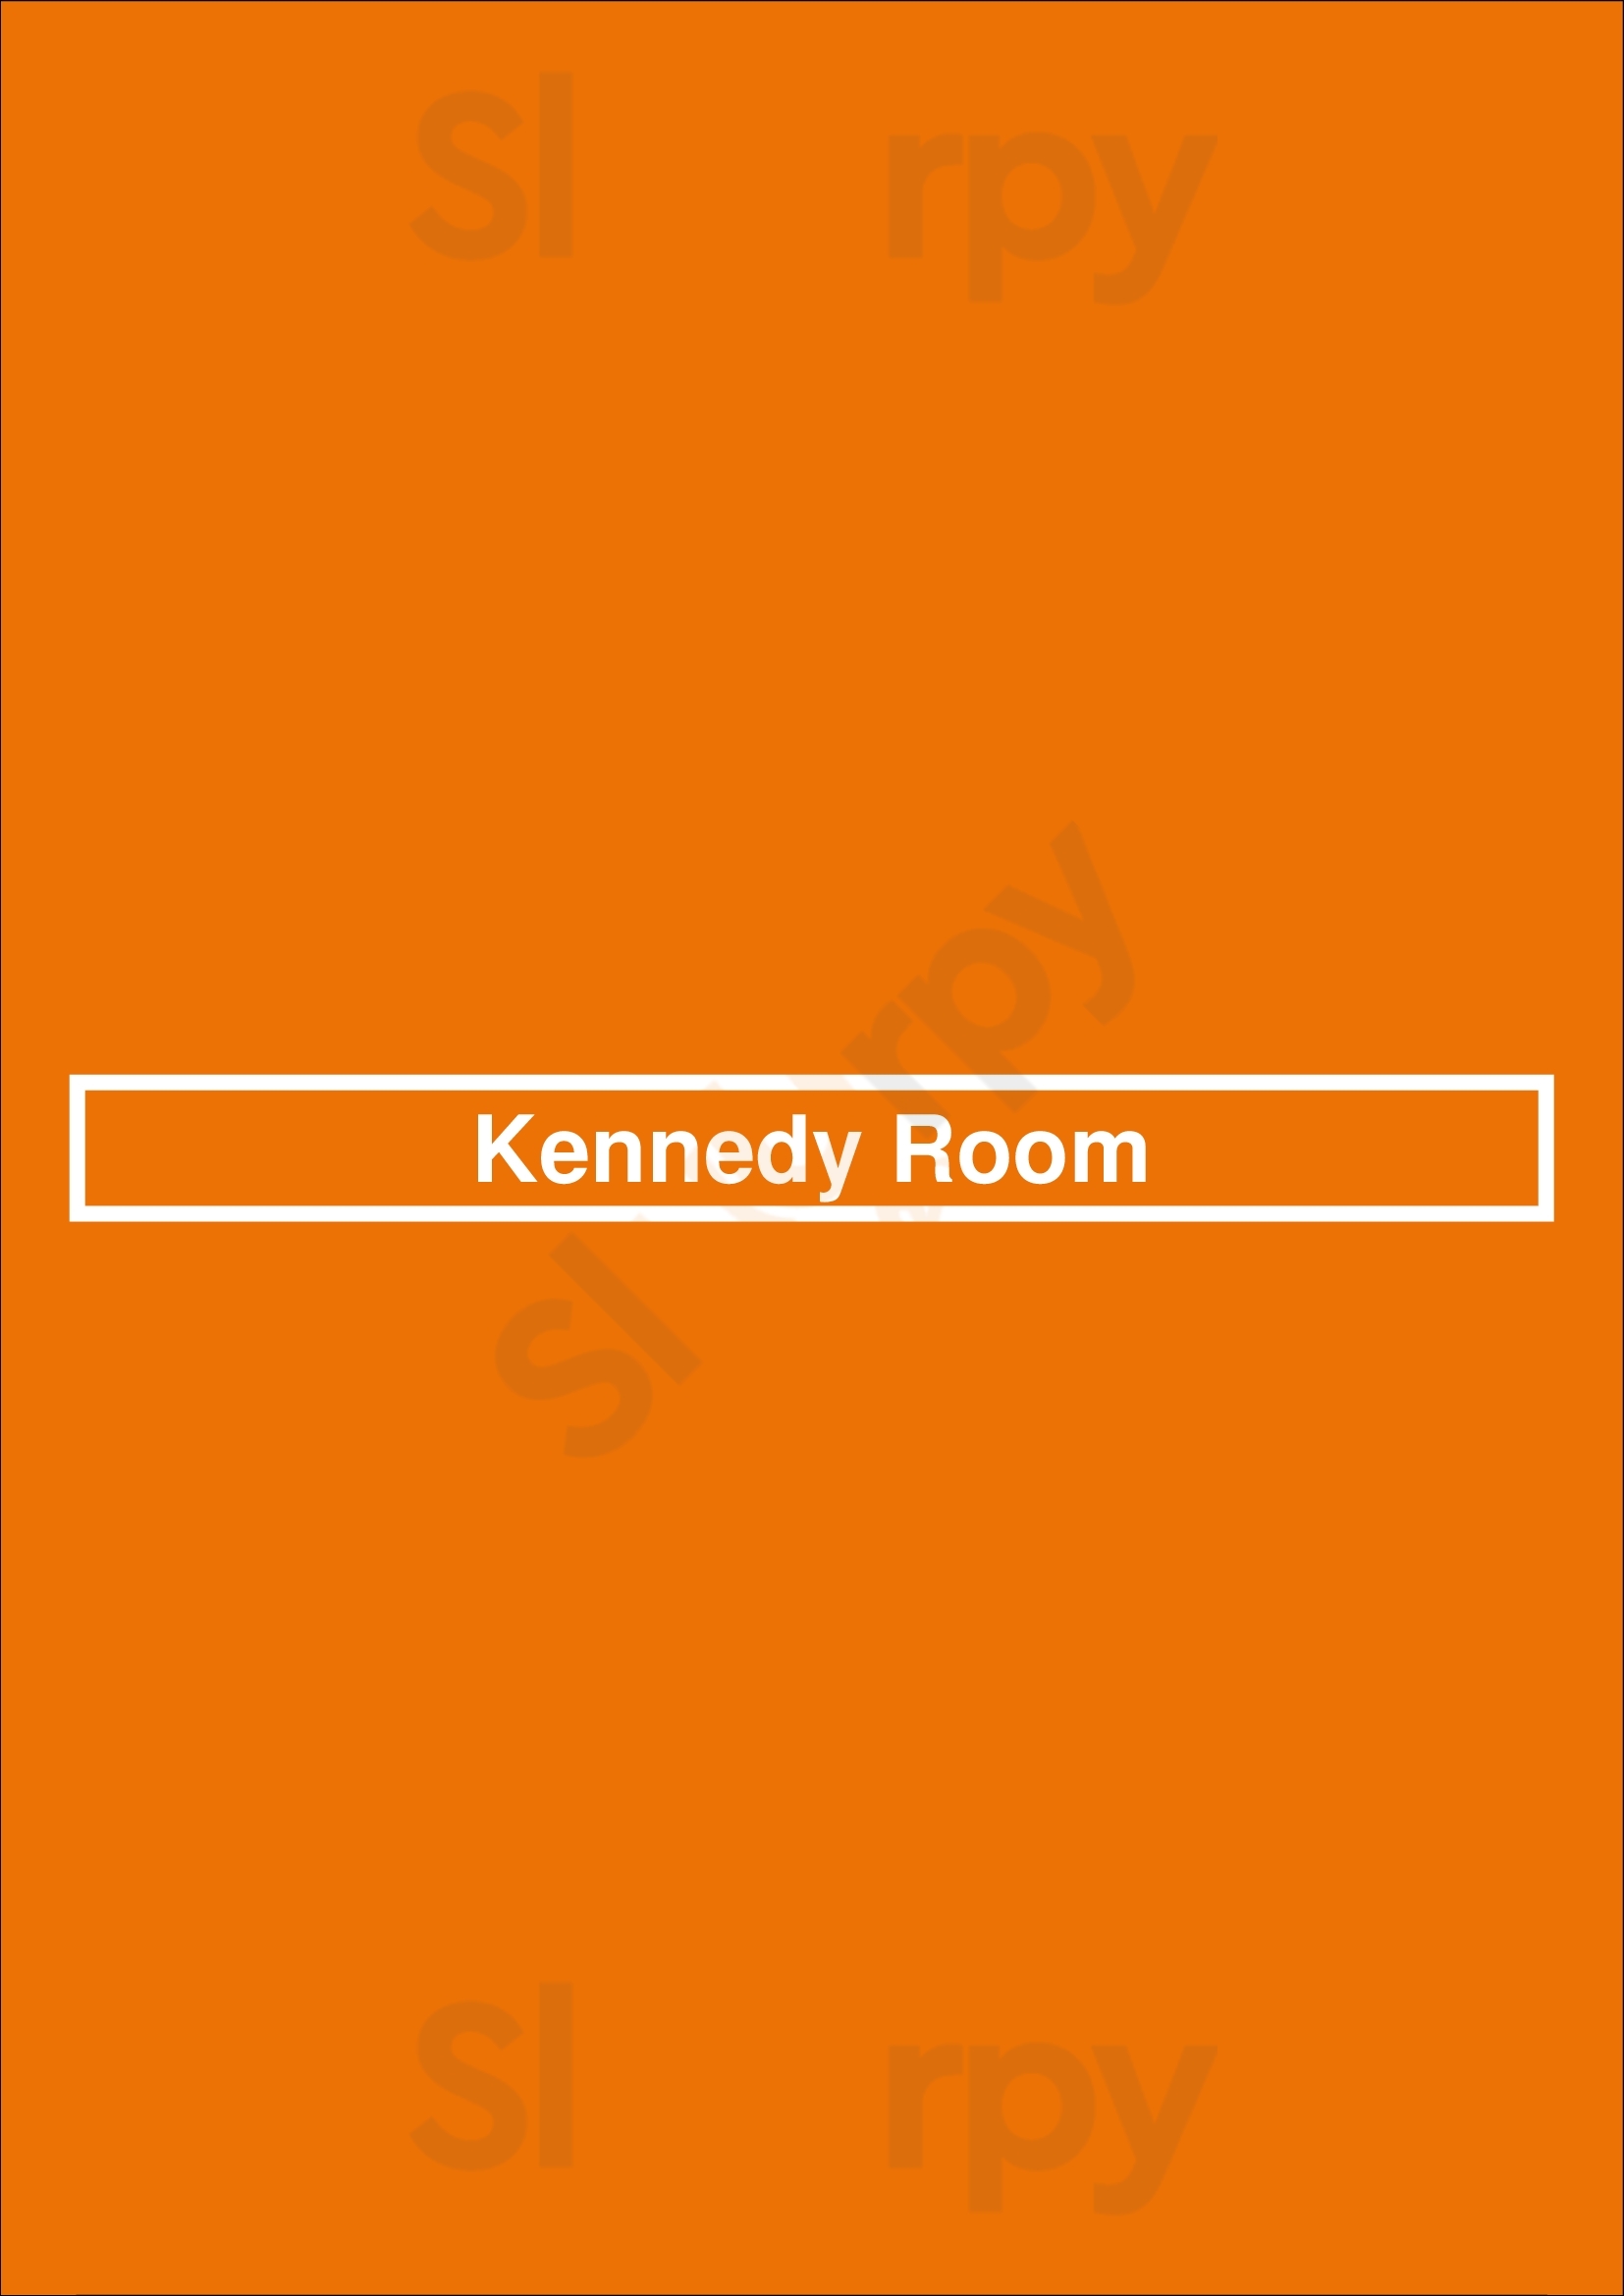 Kennedy Room Dallas Menu - 1